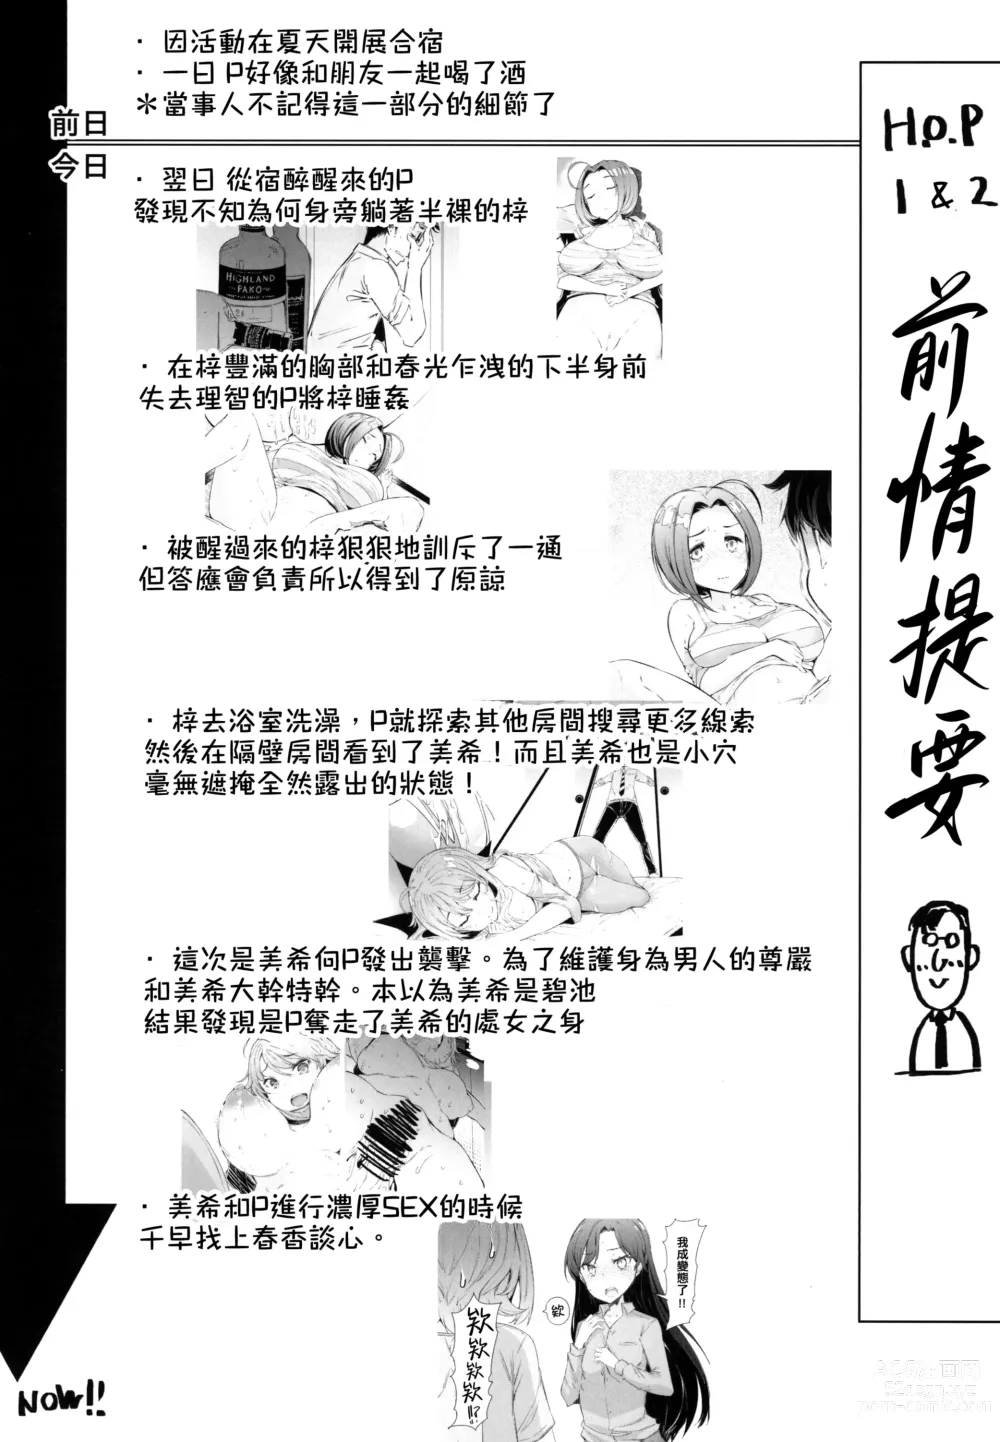 Page 3 of doujinshi HOP vol. 03 Final Episode